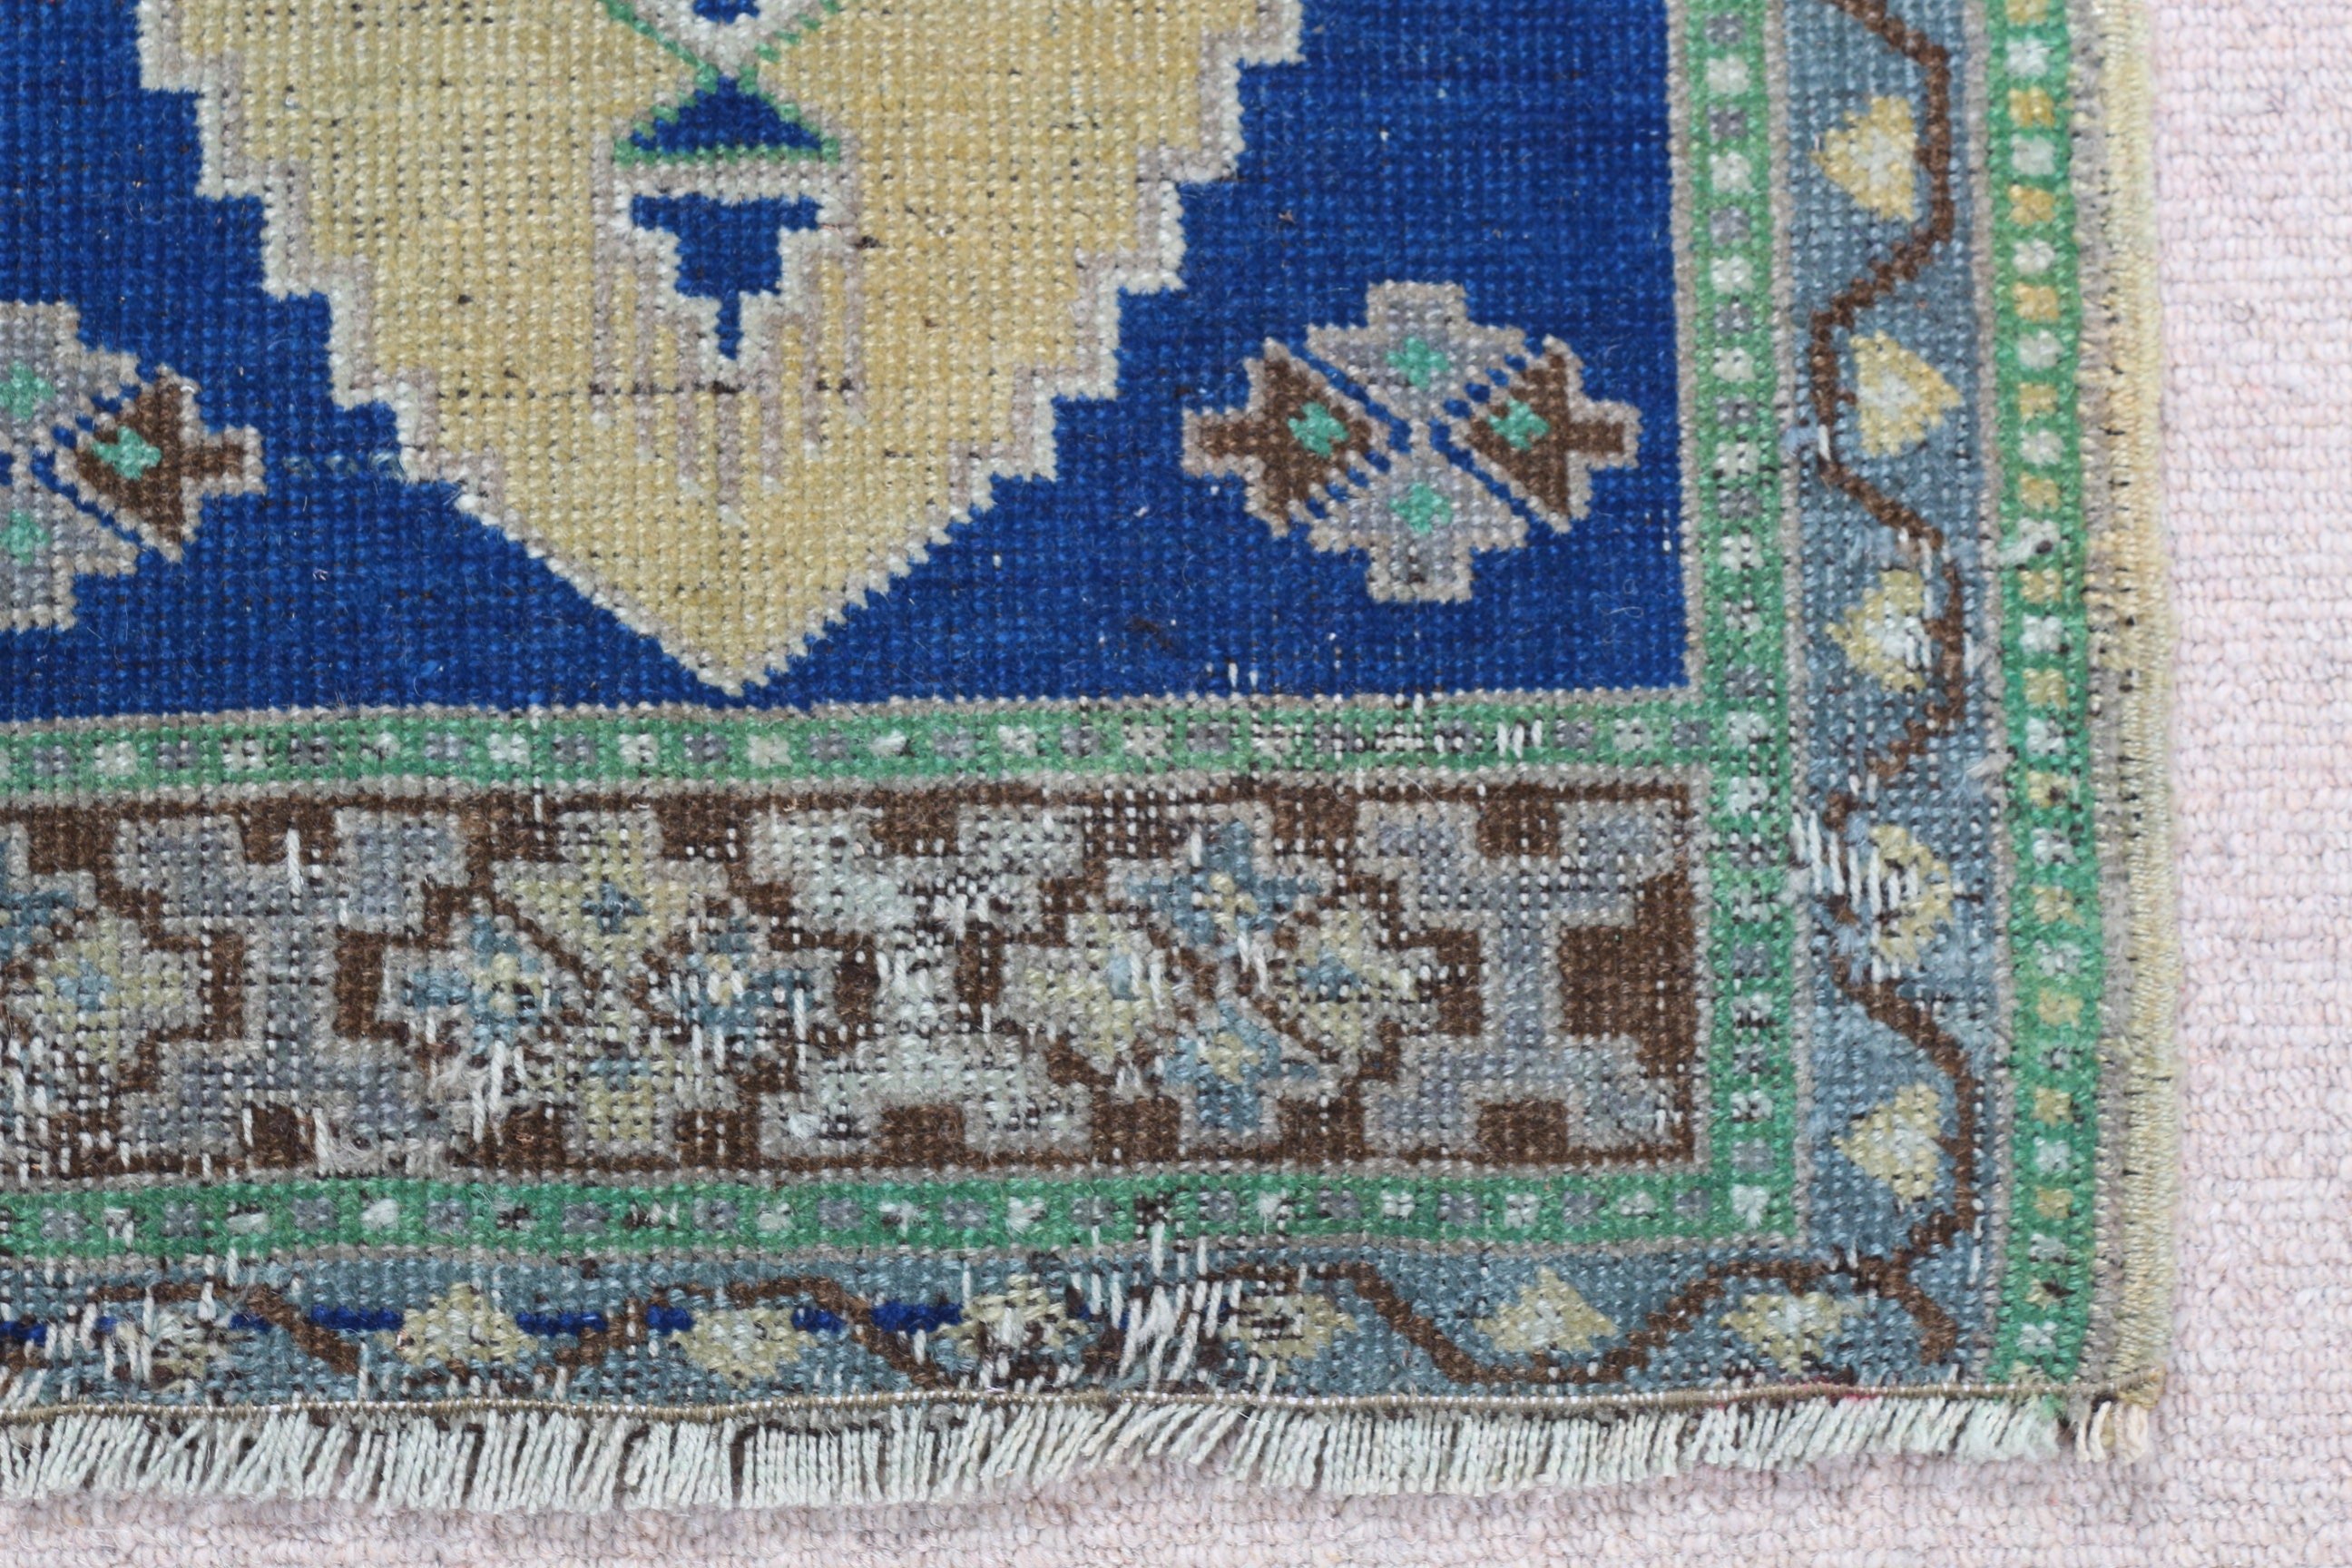 Antique Rug, Turkish Rug, Vintage Rugs, 1.7x3.1 ft Small Rugs, Wall Hanging Rugs, Old Rugs, Blue Anatolian Rugs, Bathroom Rug, Bedroom Rugs